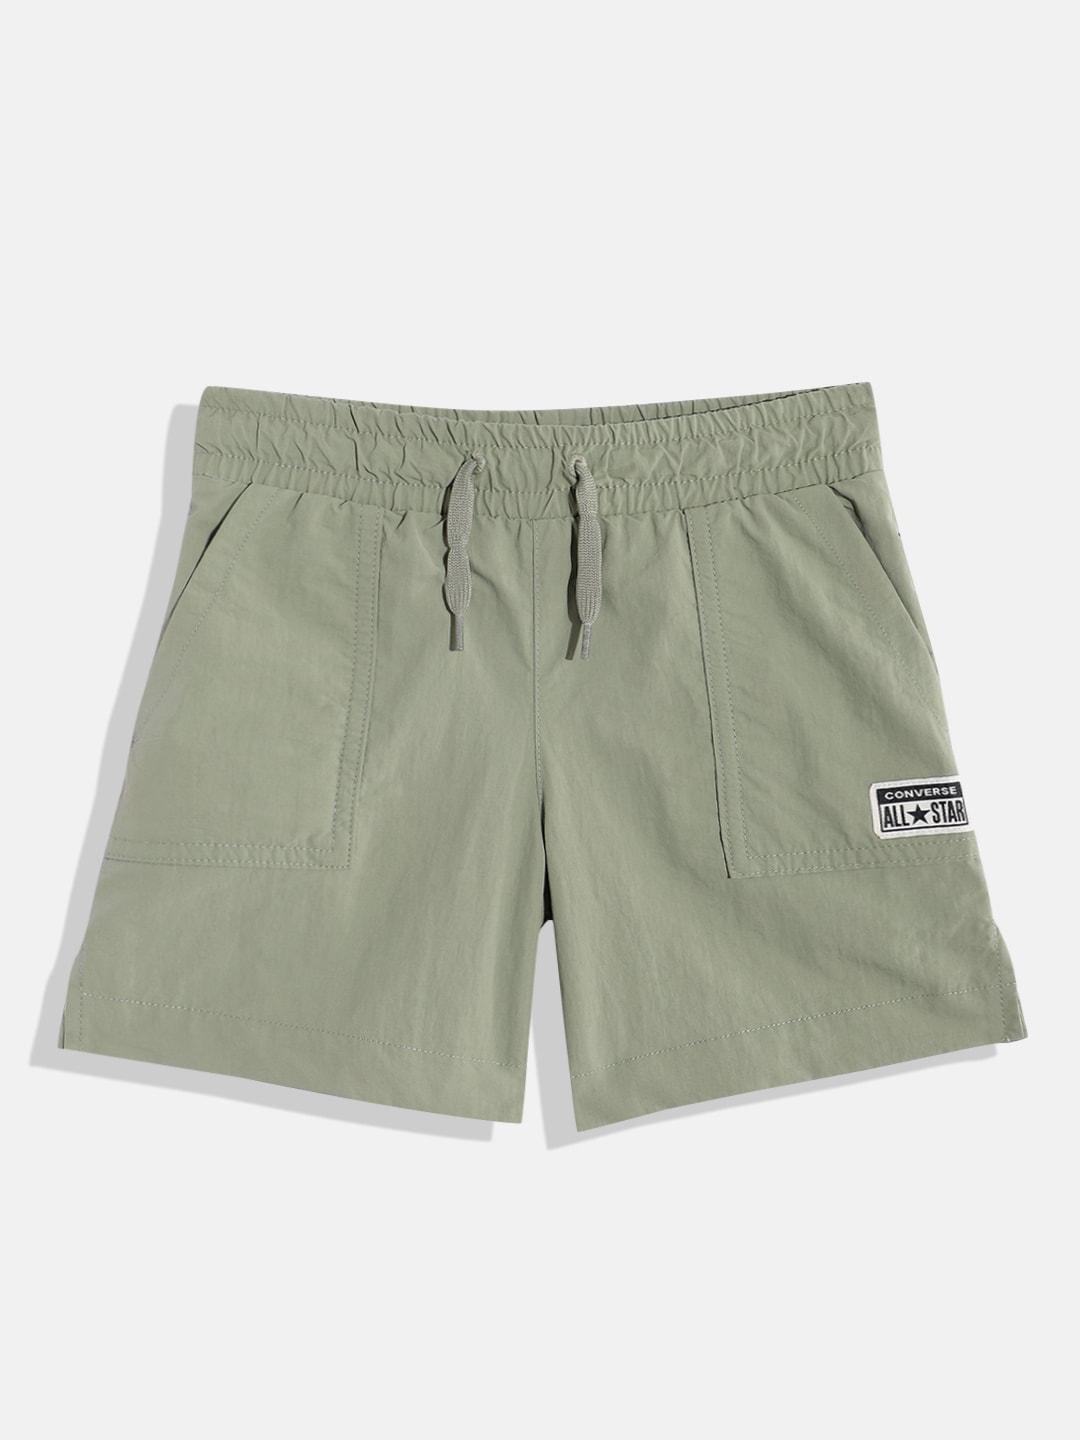 converse boys olive green shorts